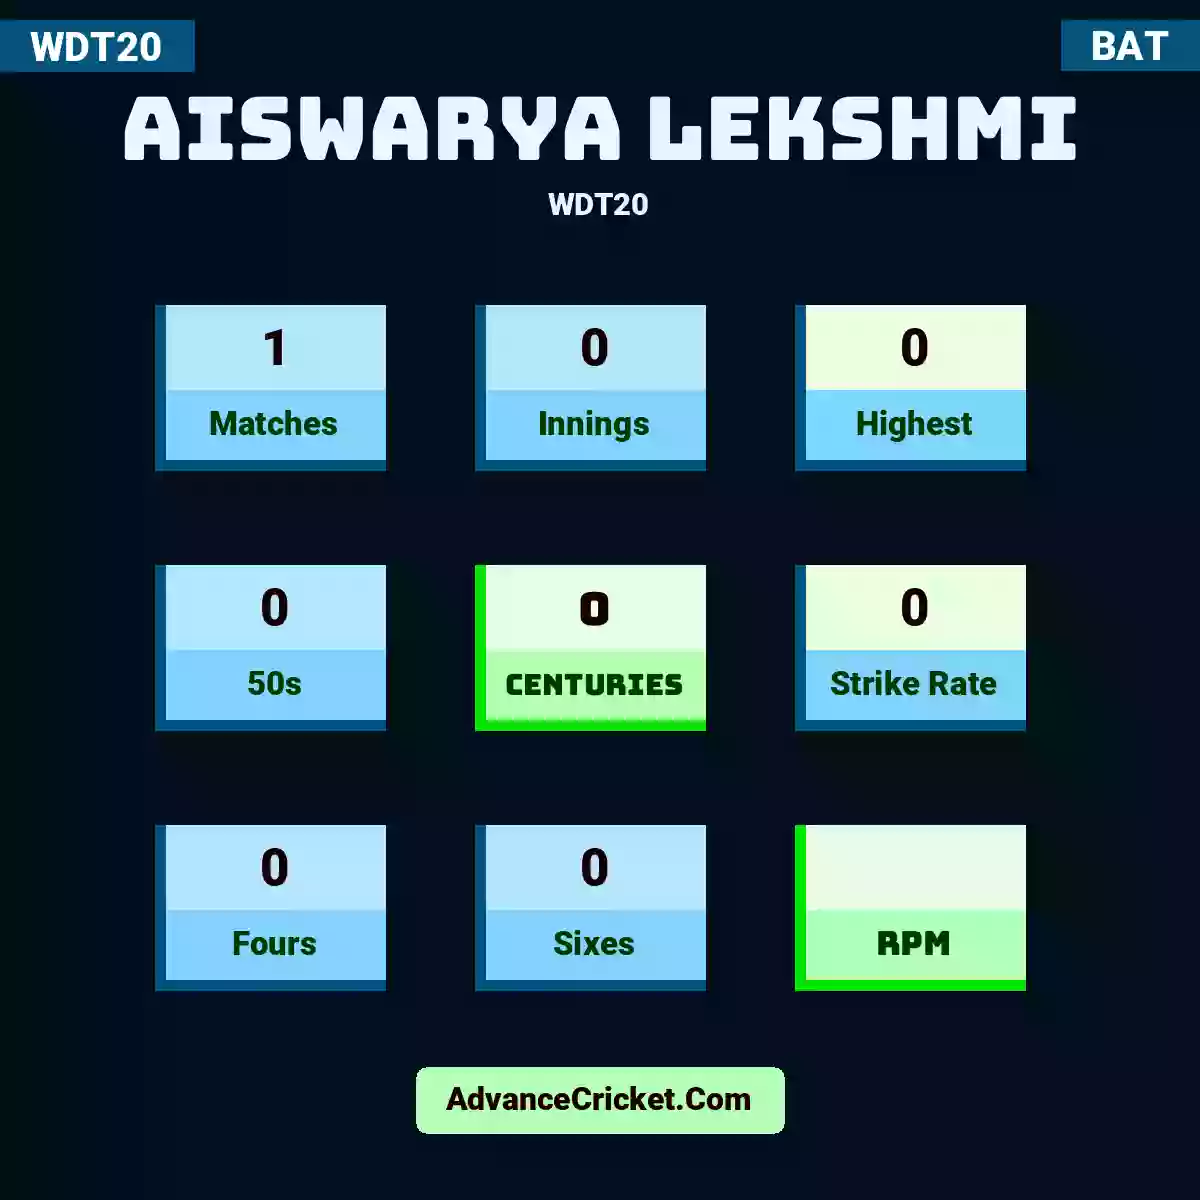 Aiswarya Lekshmi WDT20 , Aiswarya Lekshmi played 1 matches, scored 0 runs as highest, 0 half-centuries, and 0 centuries, with a strike rate of 0. A.Lekshmi hit 0 fours and 0 sixes.